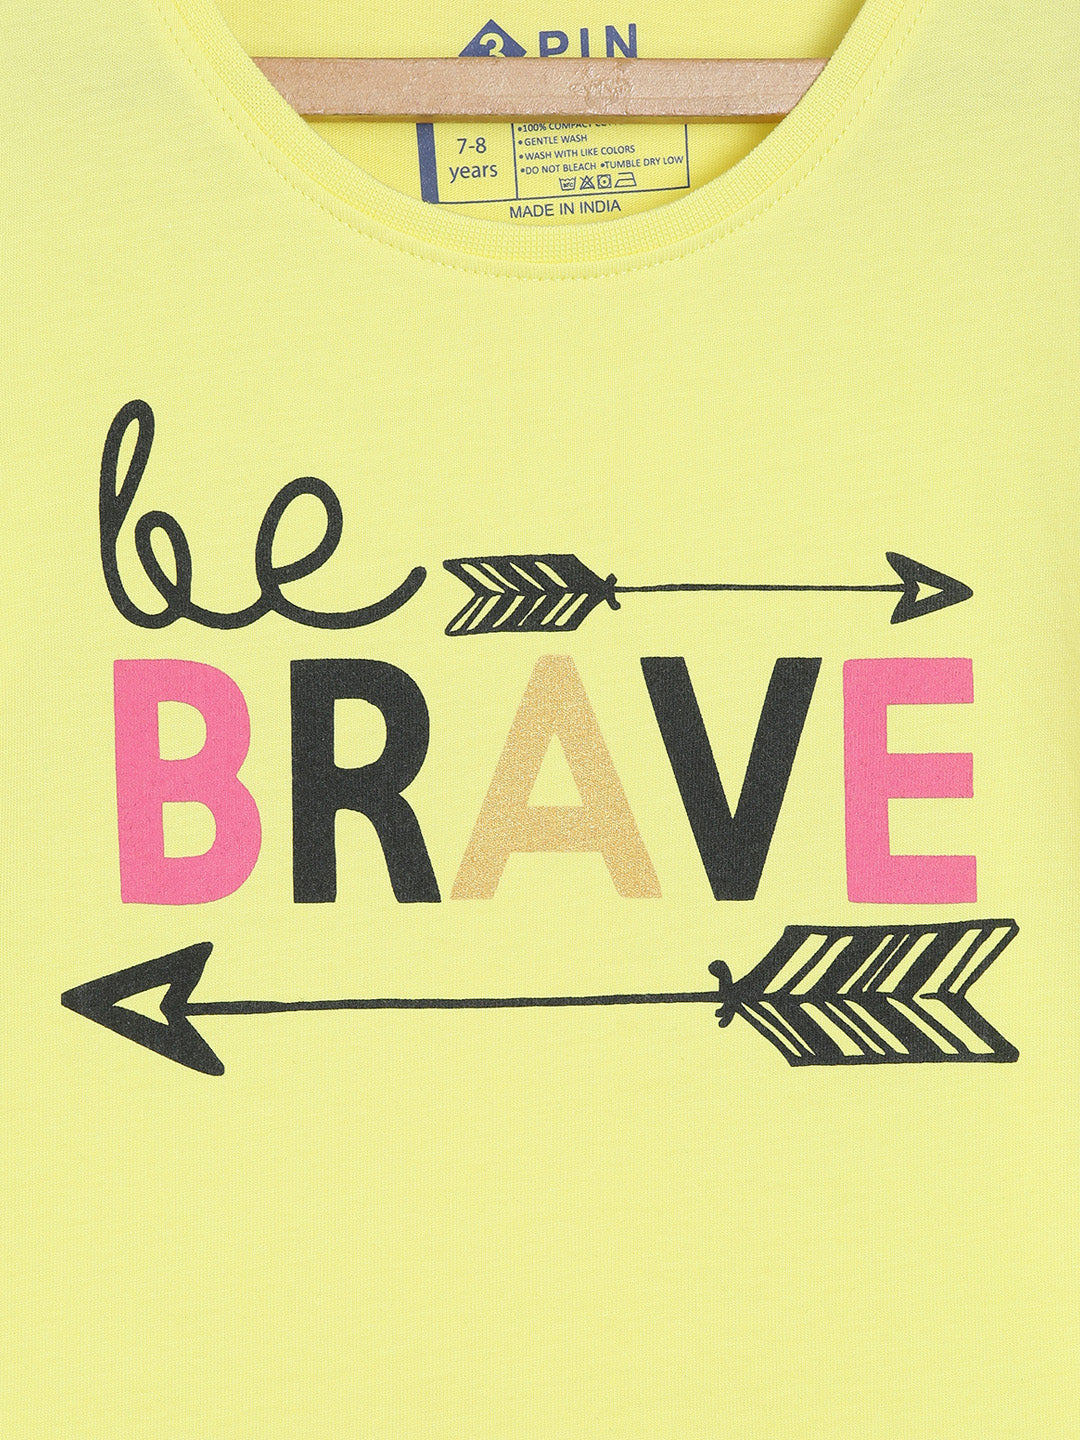 Stylish Brave Print T-shirt for girls